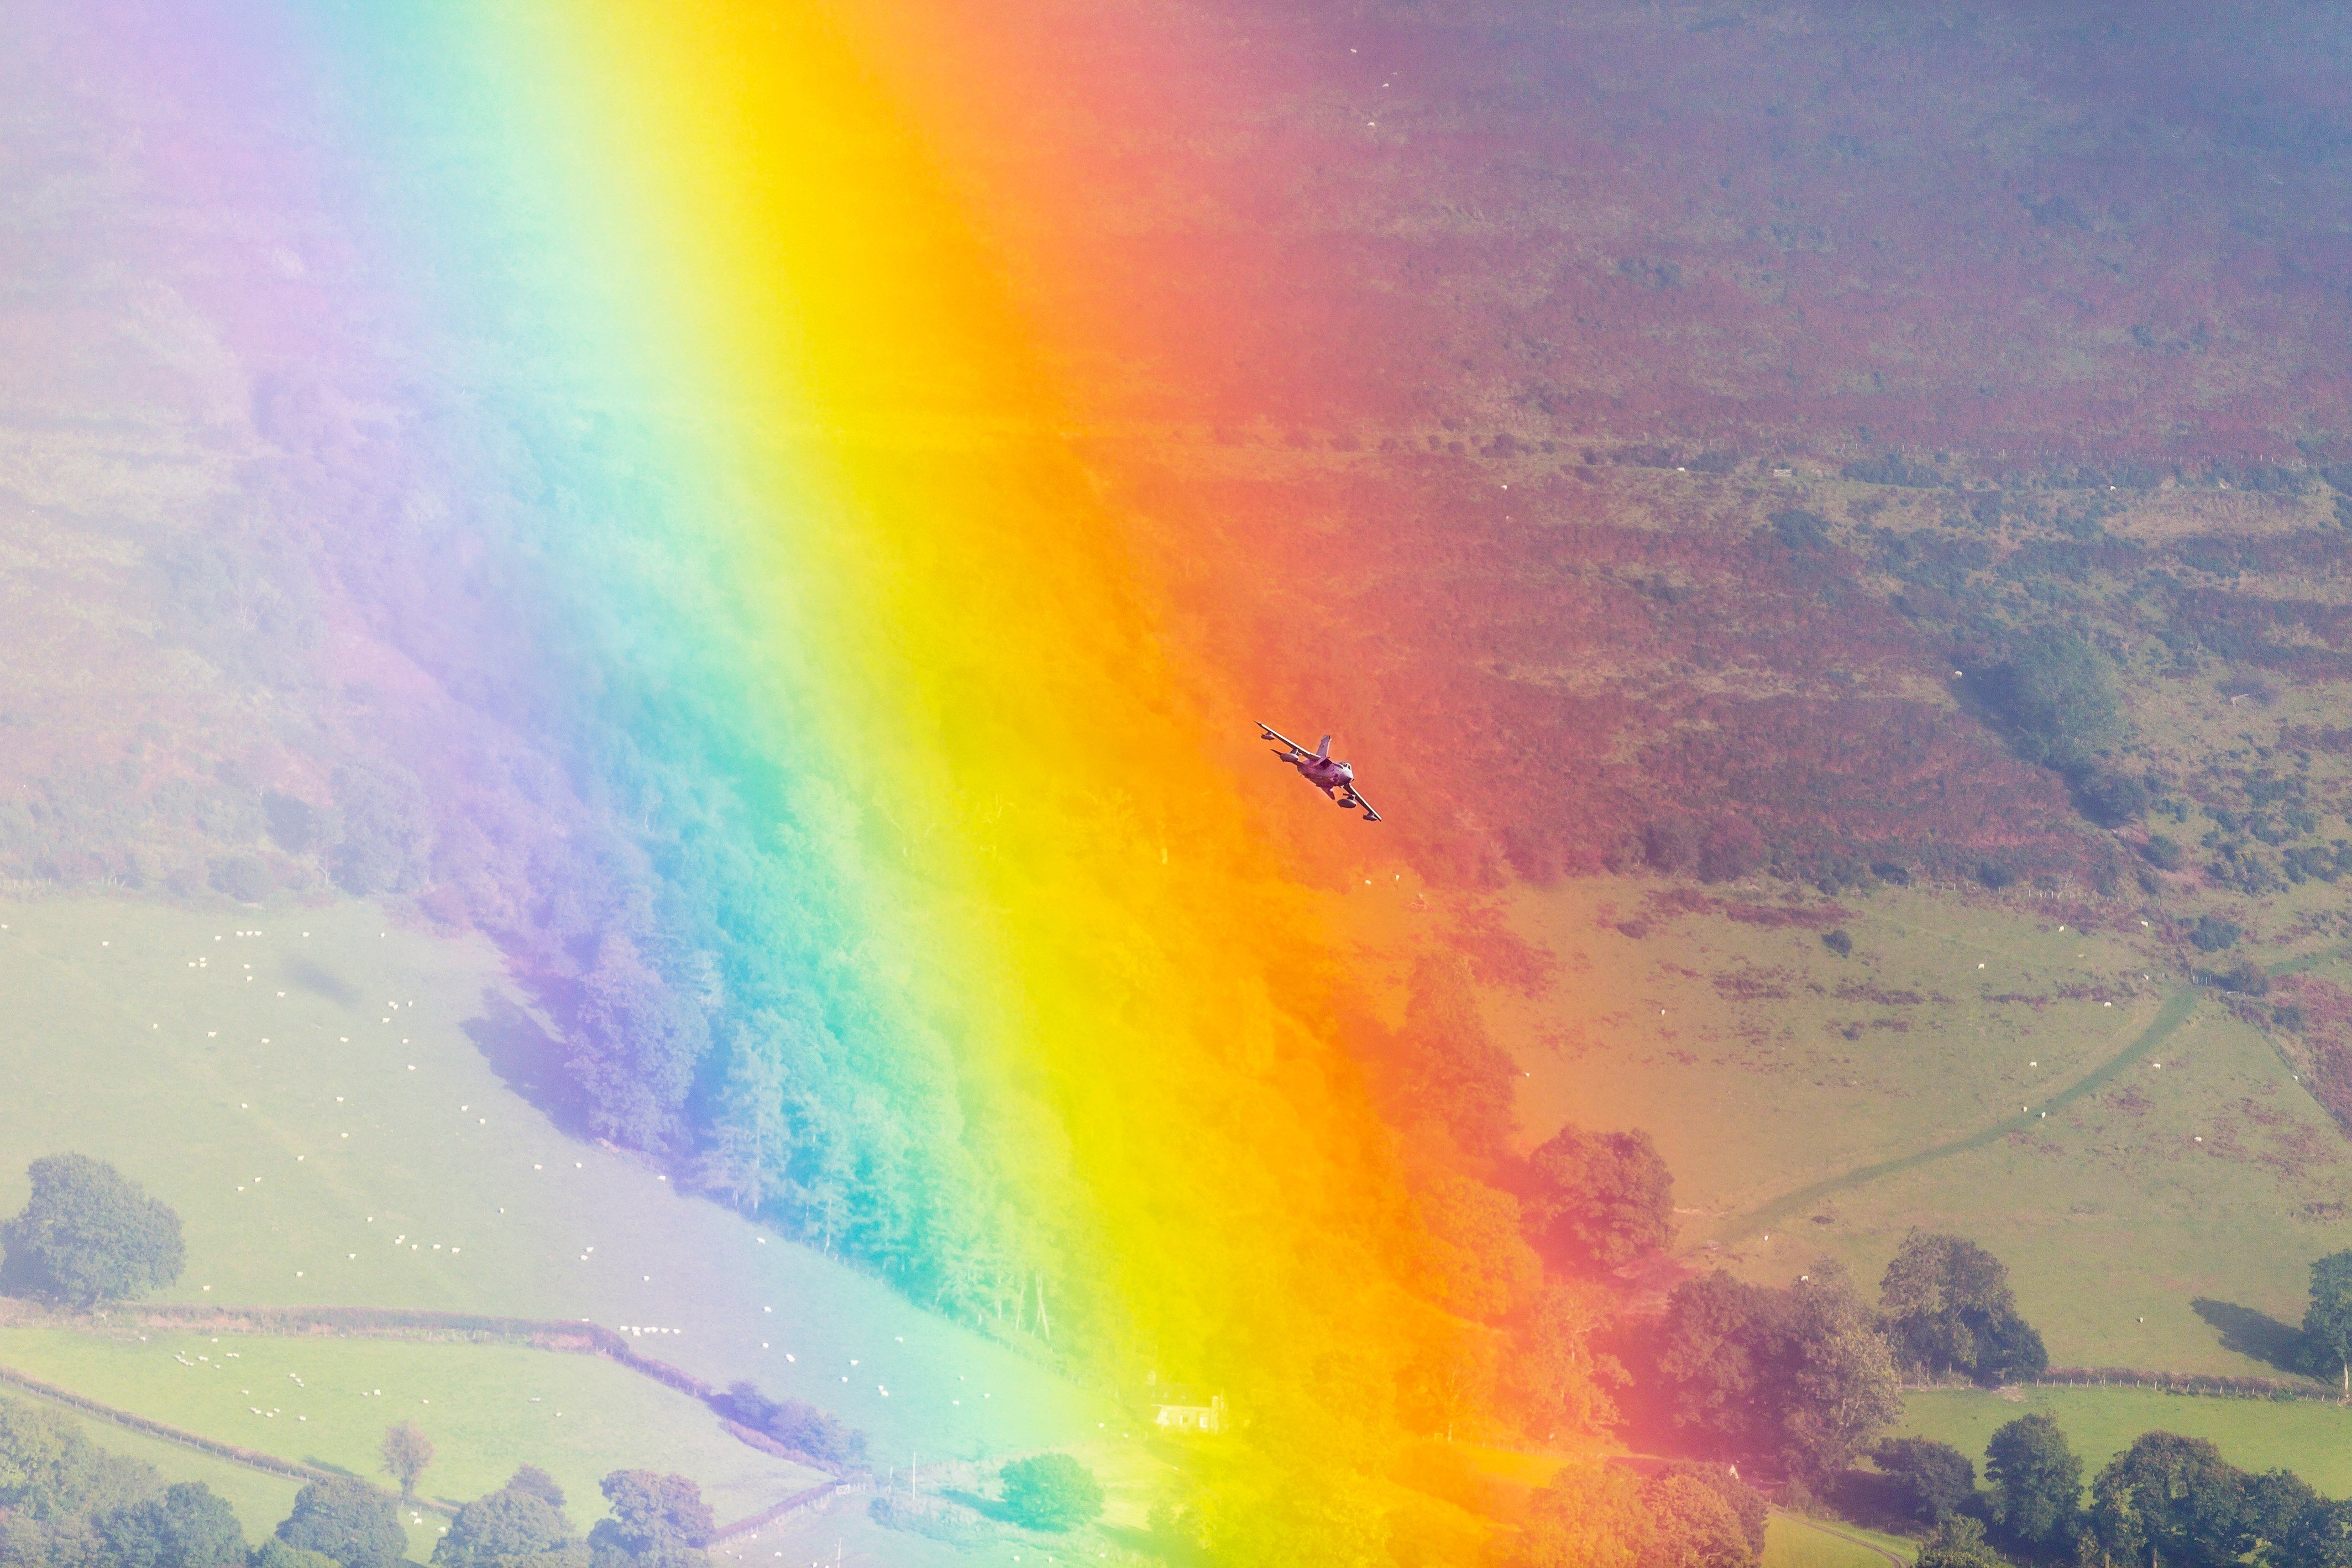 A Royal Air Force GR Tornado Soars Through a Rainbow in the Cambrian